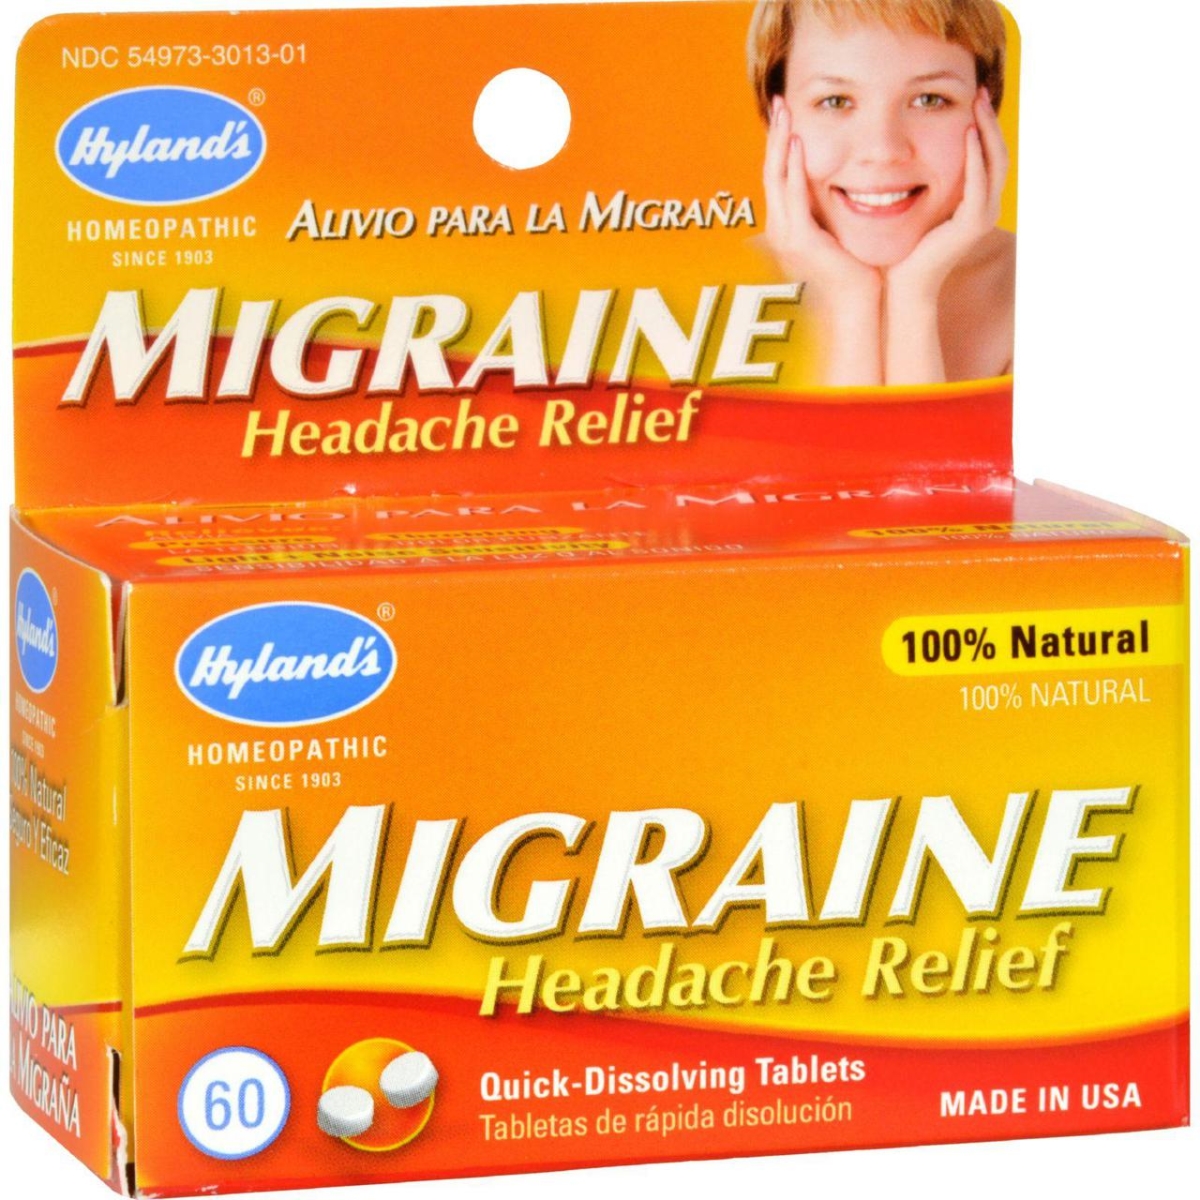 Hg0230516 Migraine Headache Relief, 60 Tablets